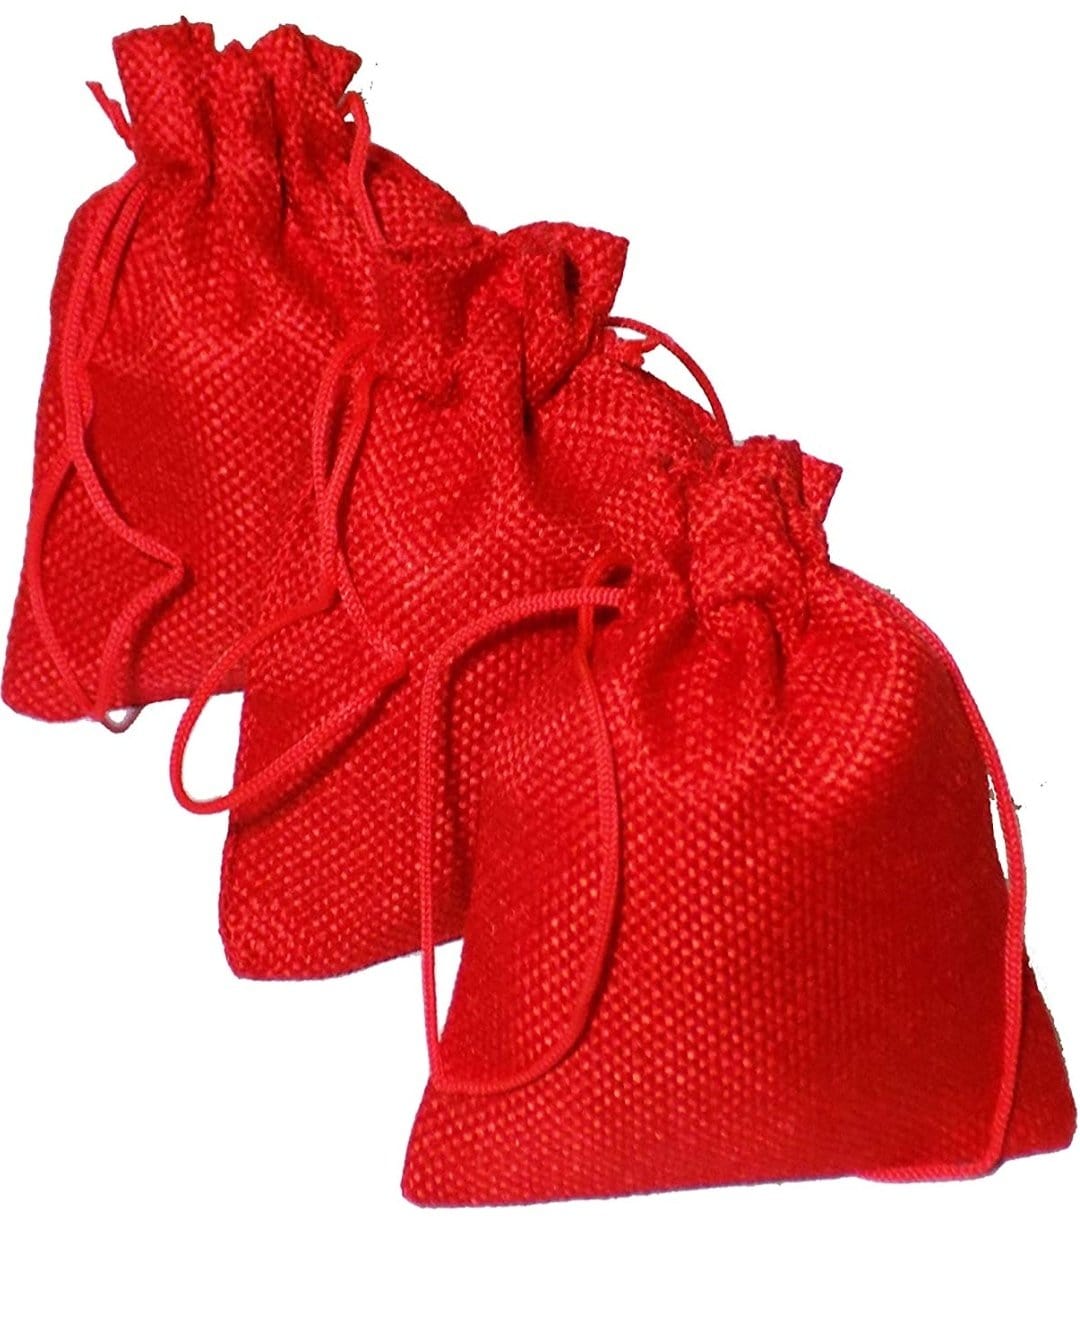 LAMANSH ® Women's Potli Bag LAMANSH Royal Premium Small (5*4 inch) High Quality Jute Linen Potli Bags Pouch Best for Wedding ,Party Supply Gift Bags (Set of 12)